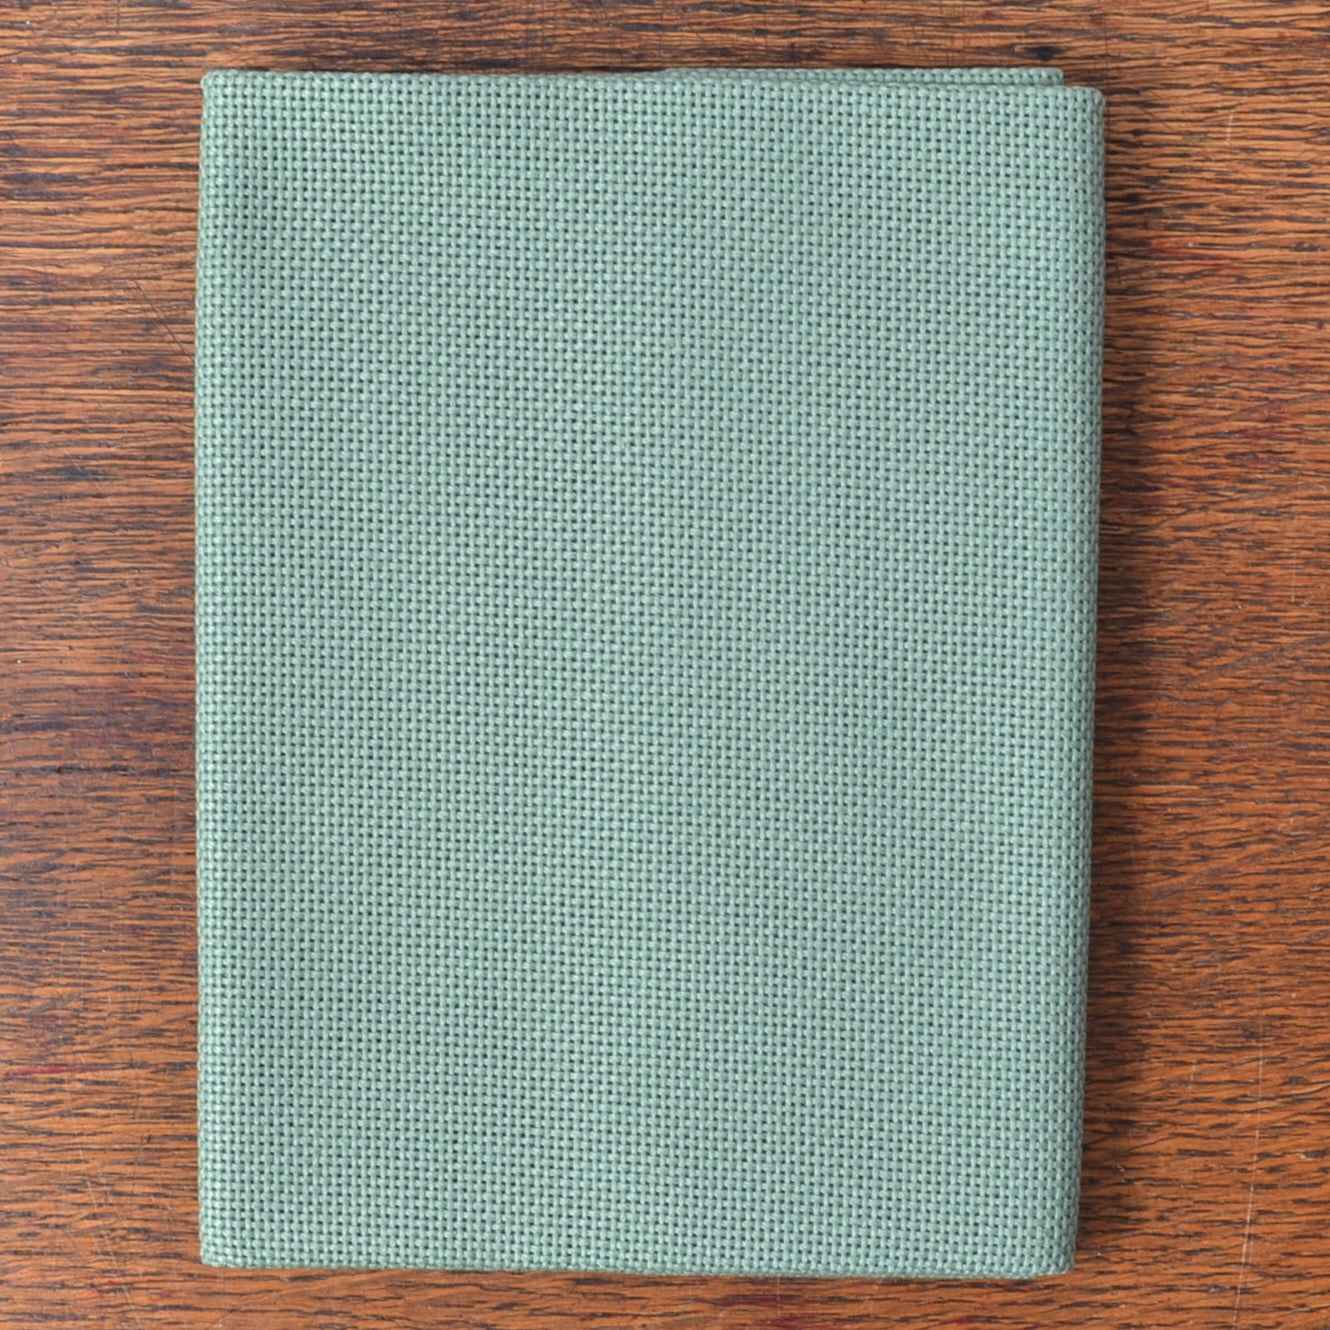 Kogin Stitching, 18 Count Soft Green Congress Cloth